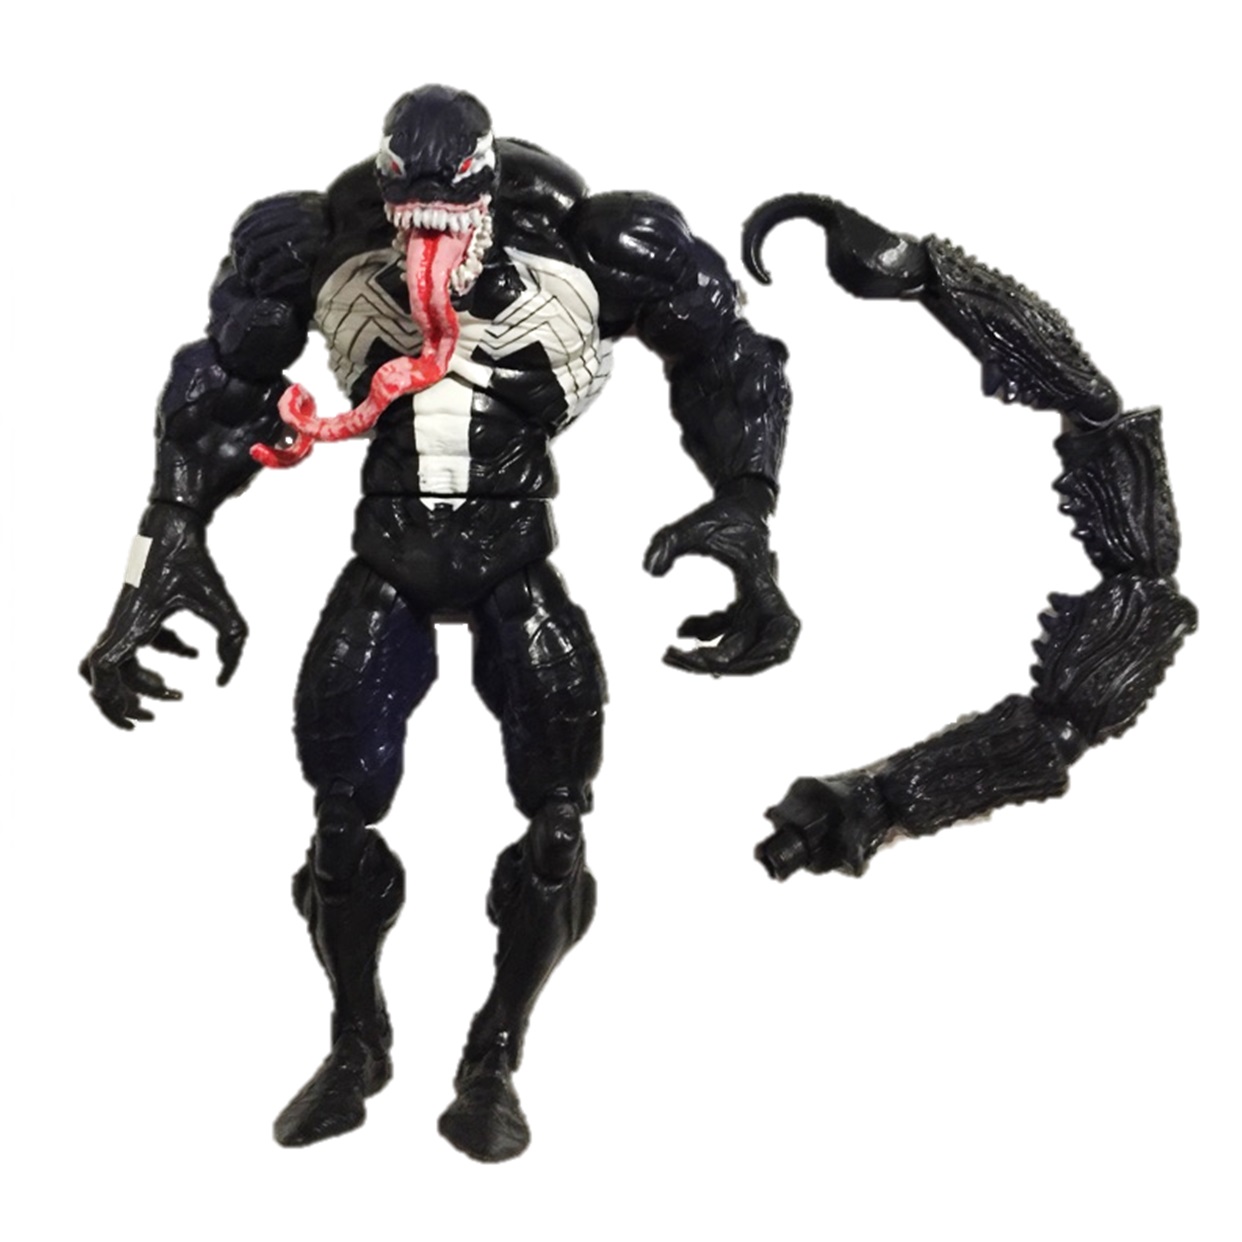 Venom Scorpion Stinger Figura Marvel Spider Man 4 Pulgadas